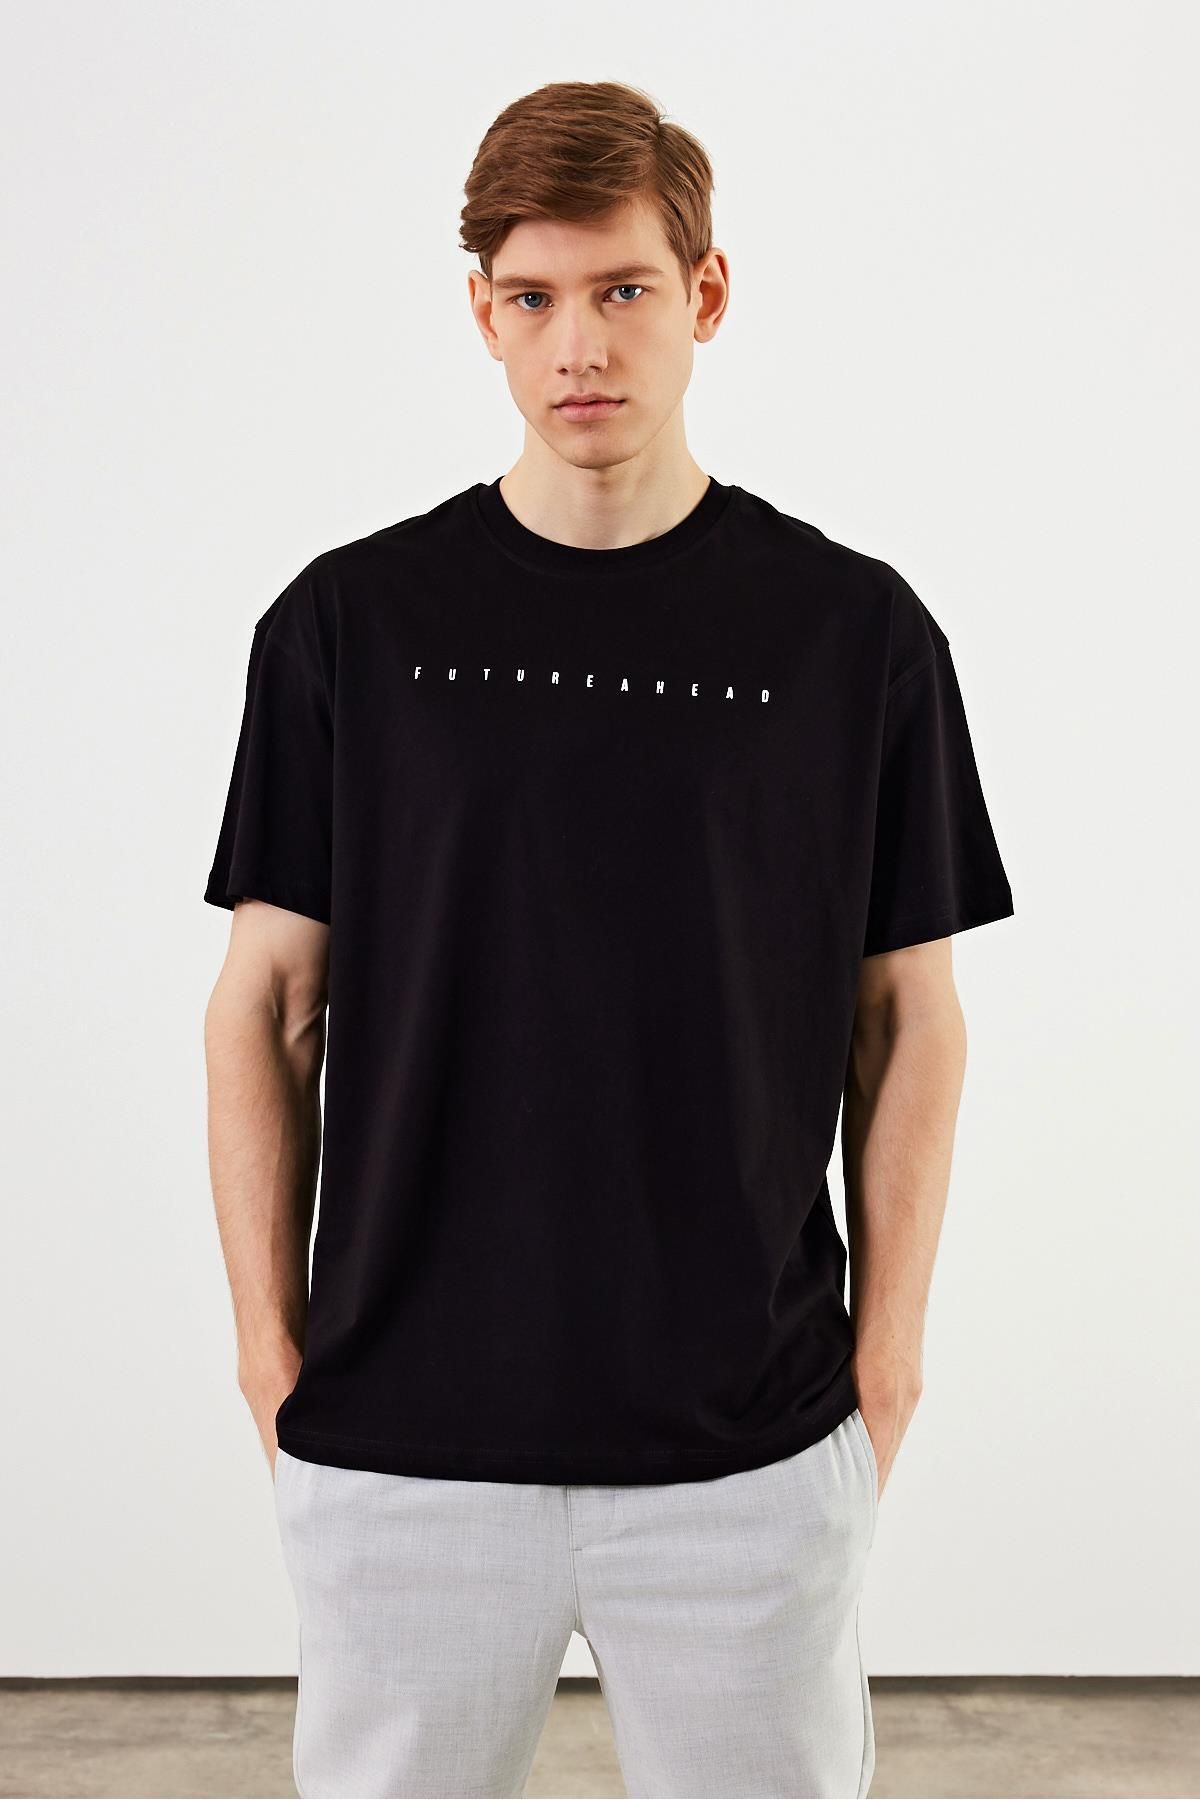 mmetalic Leo Erkek Oversize Tshirt %100 Pamuk Bisiklet Yaka Baskı Detaylı Basic Siyah Tişört